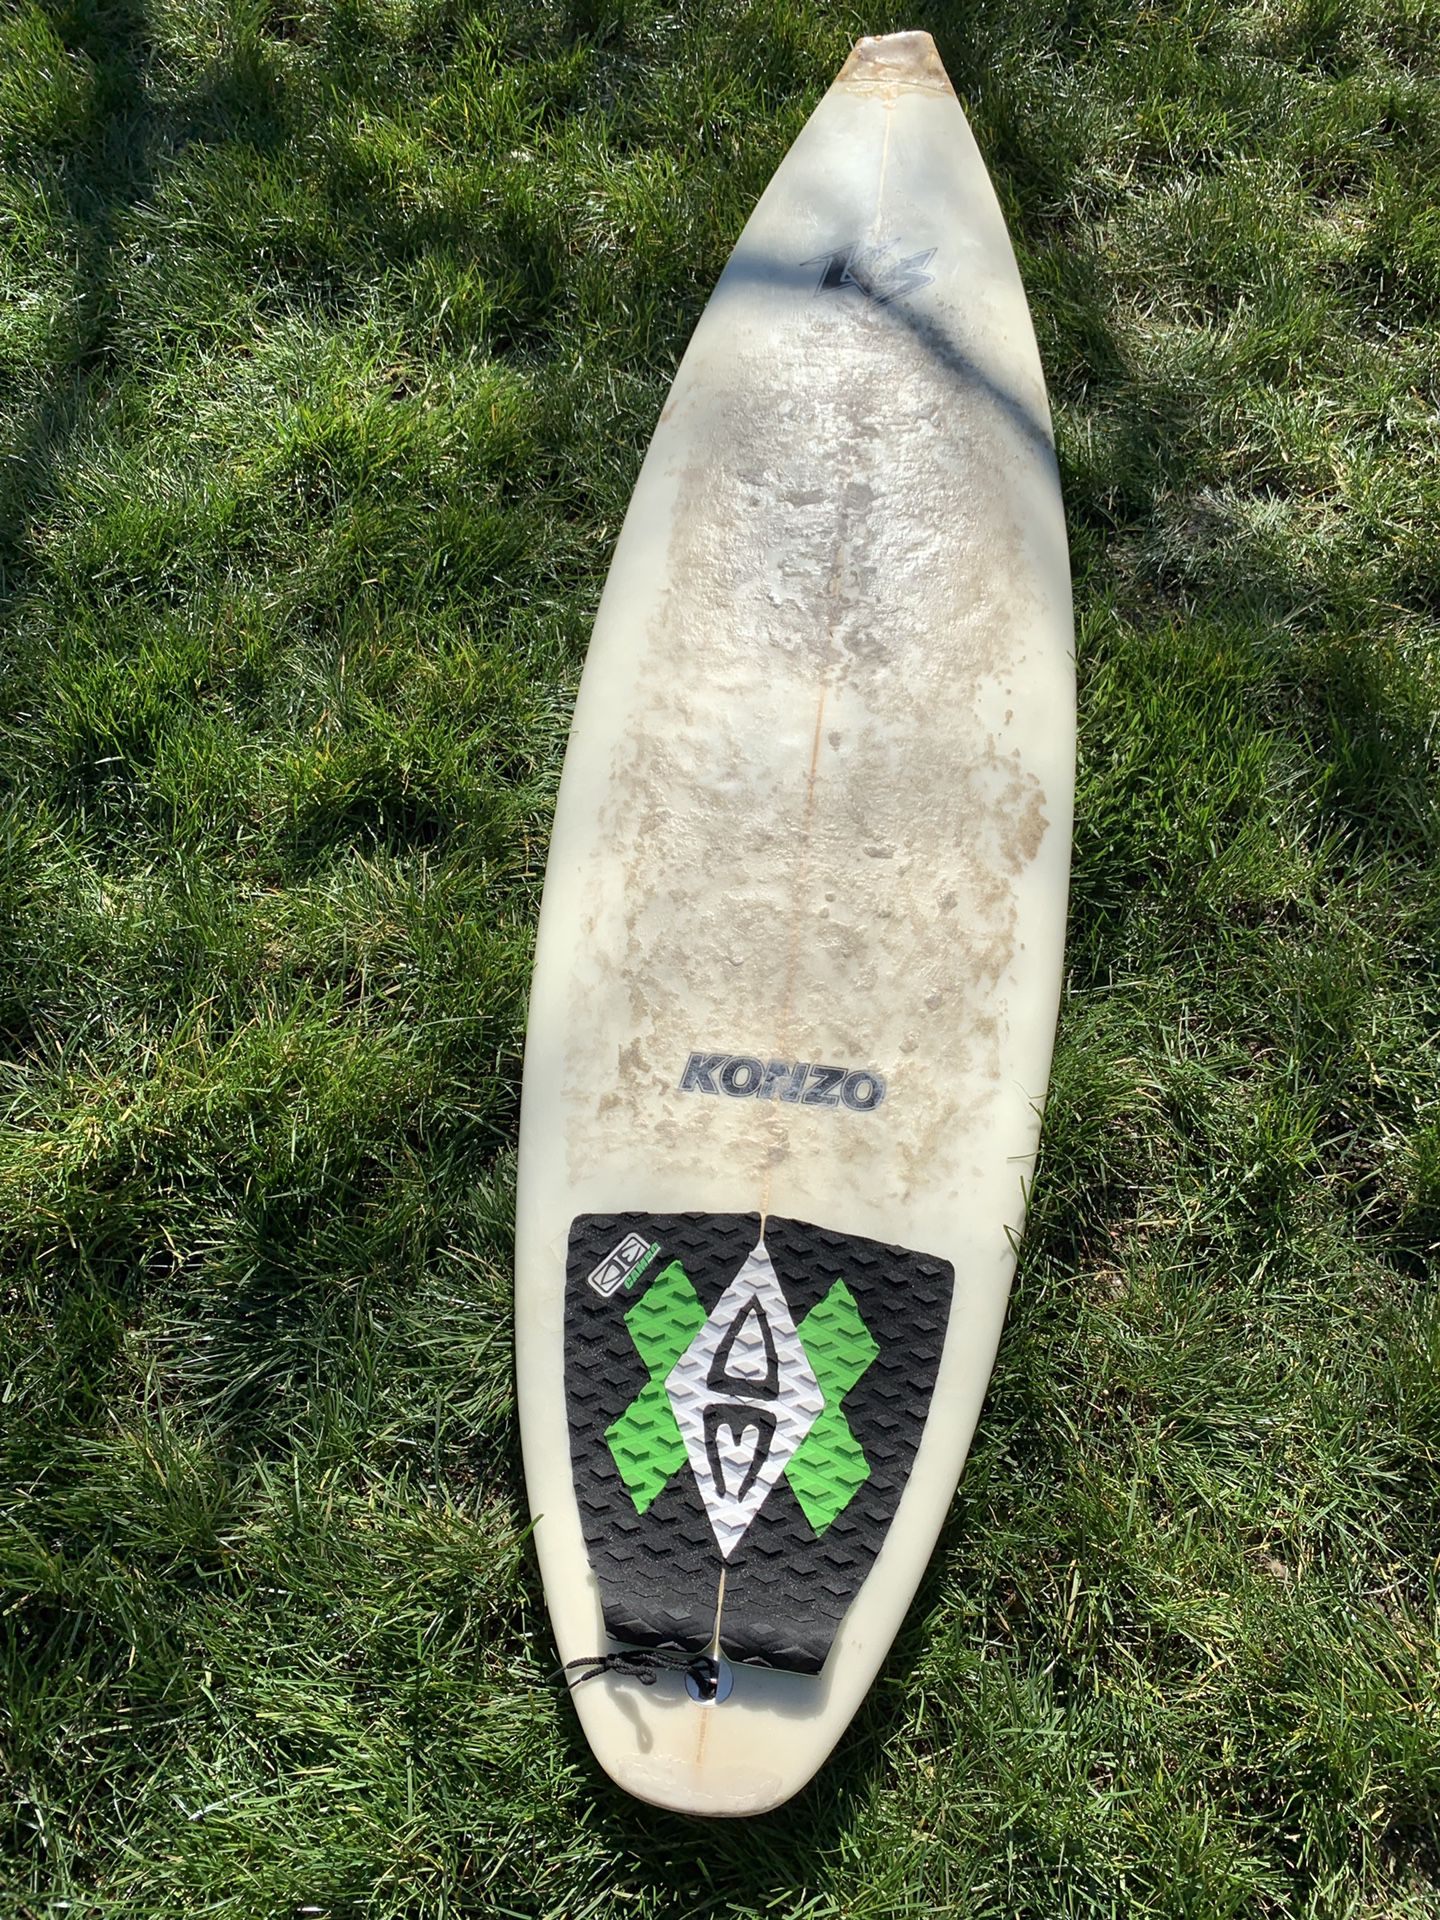 KONZO surfboard 6’6” bad island patch job